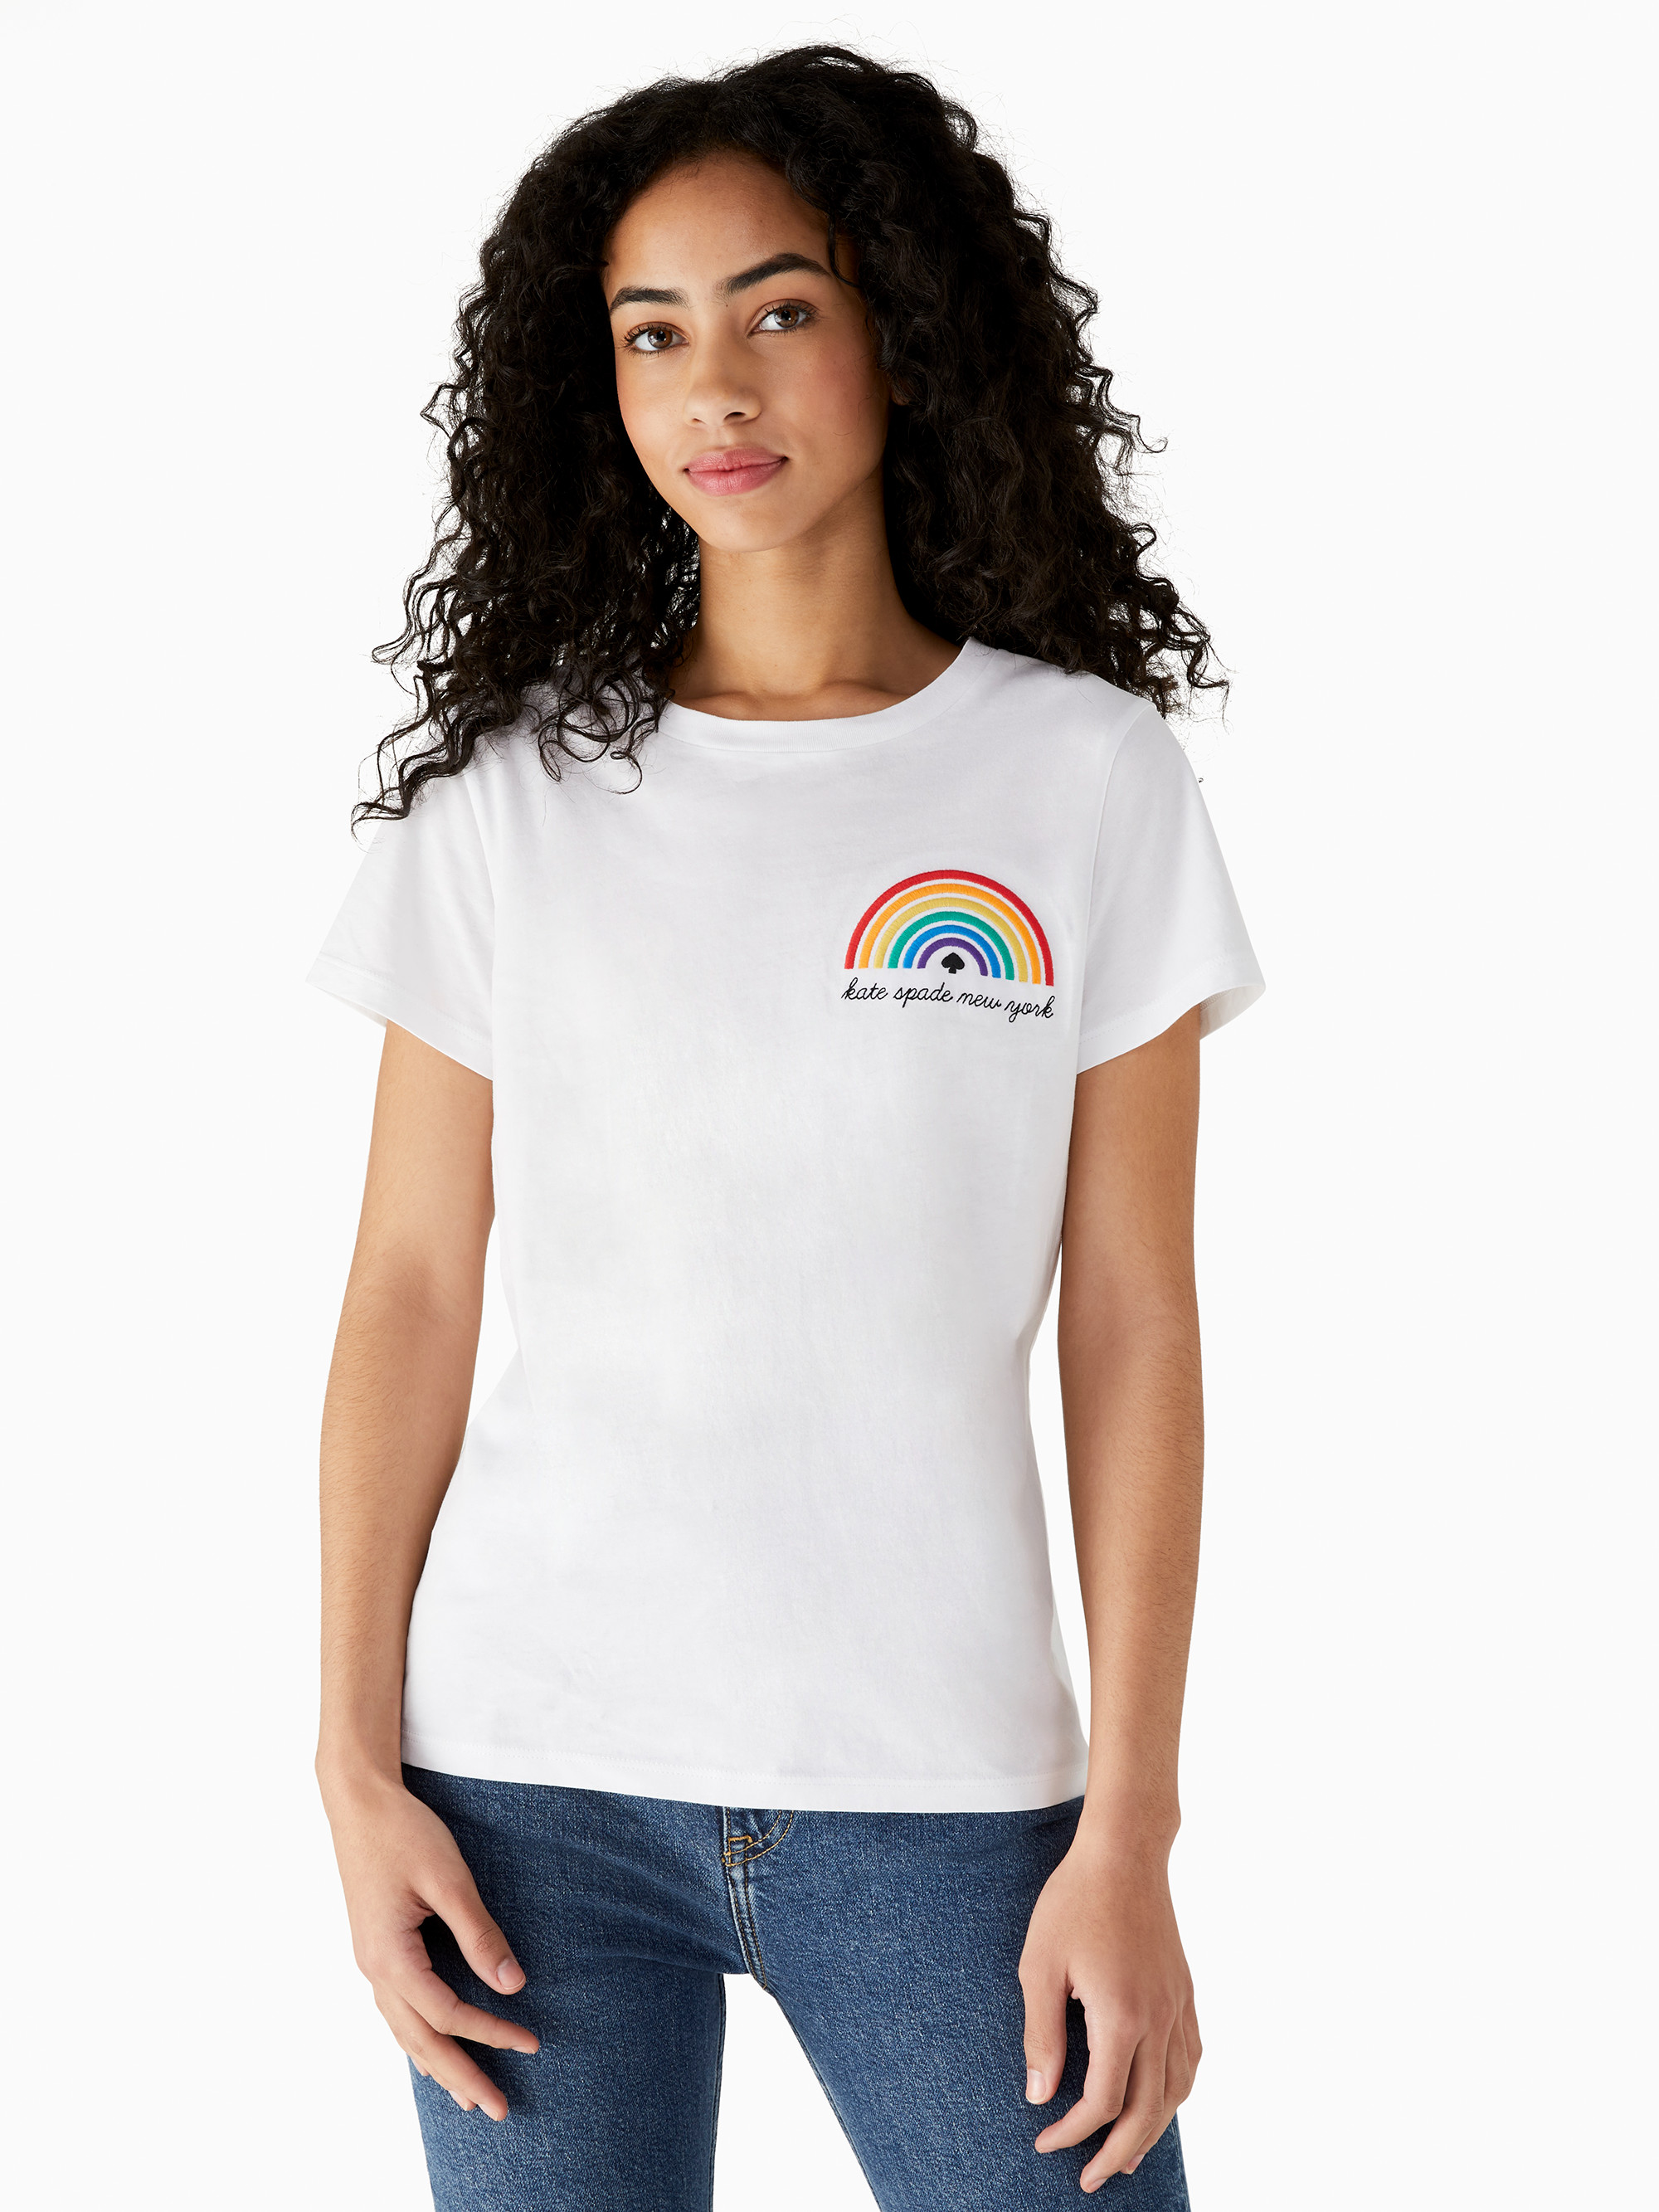 Kate Spade Rainbow T-shirt